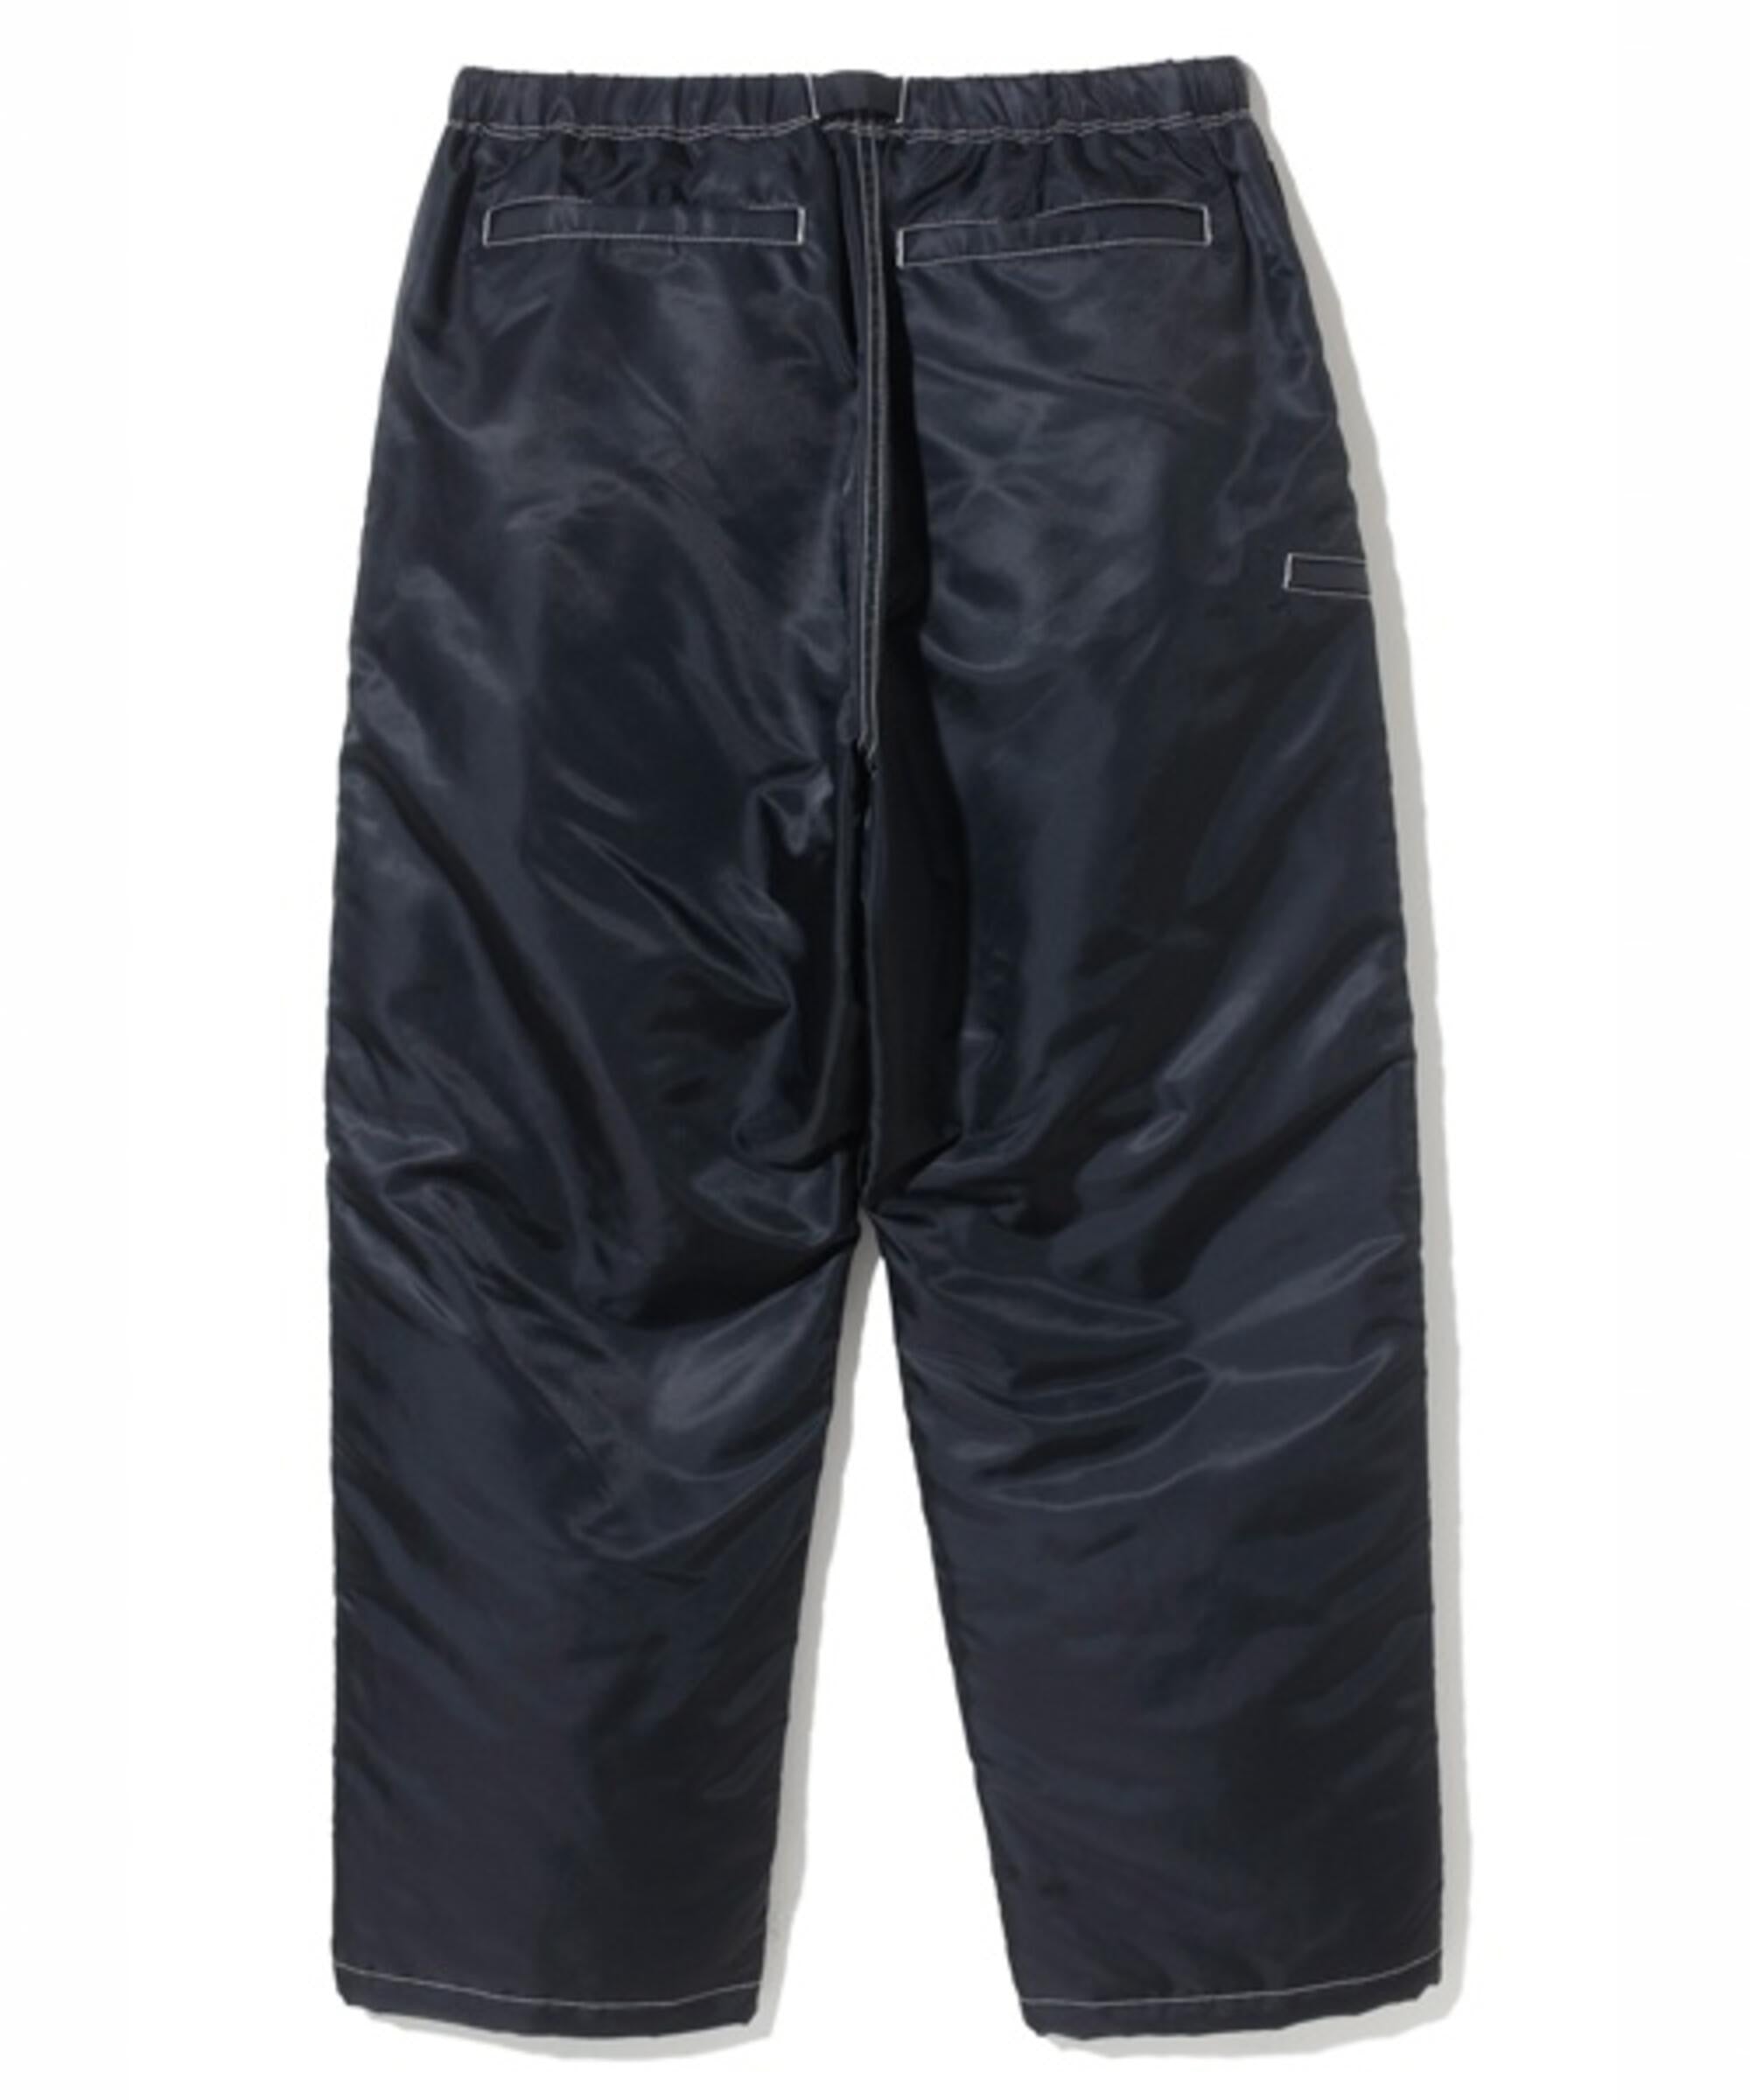 XLarge Color Stitched Puff Pants - Black